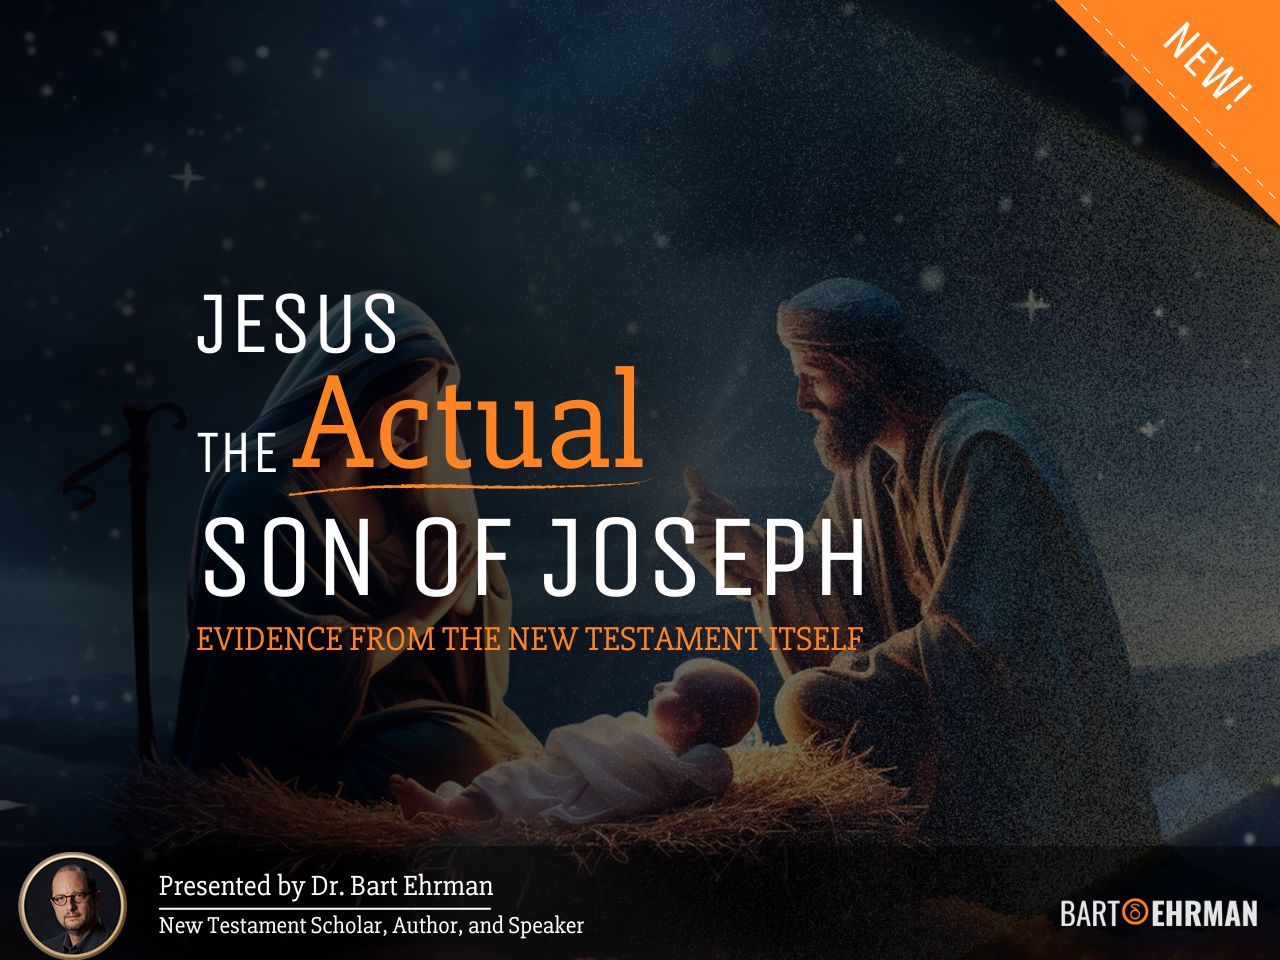 Bart Ehrman Course: Jesus the Actual Son of Joseph